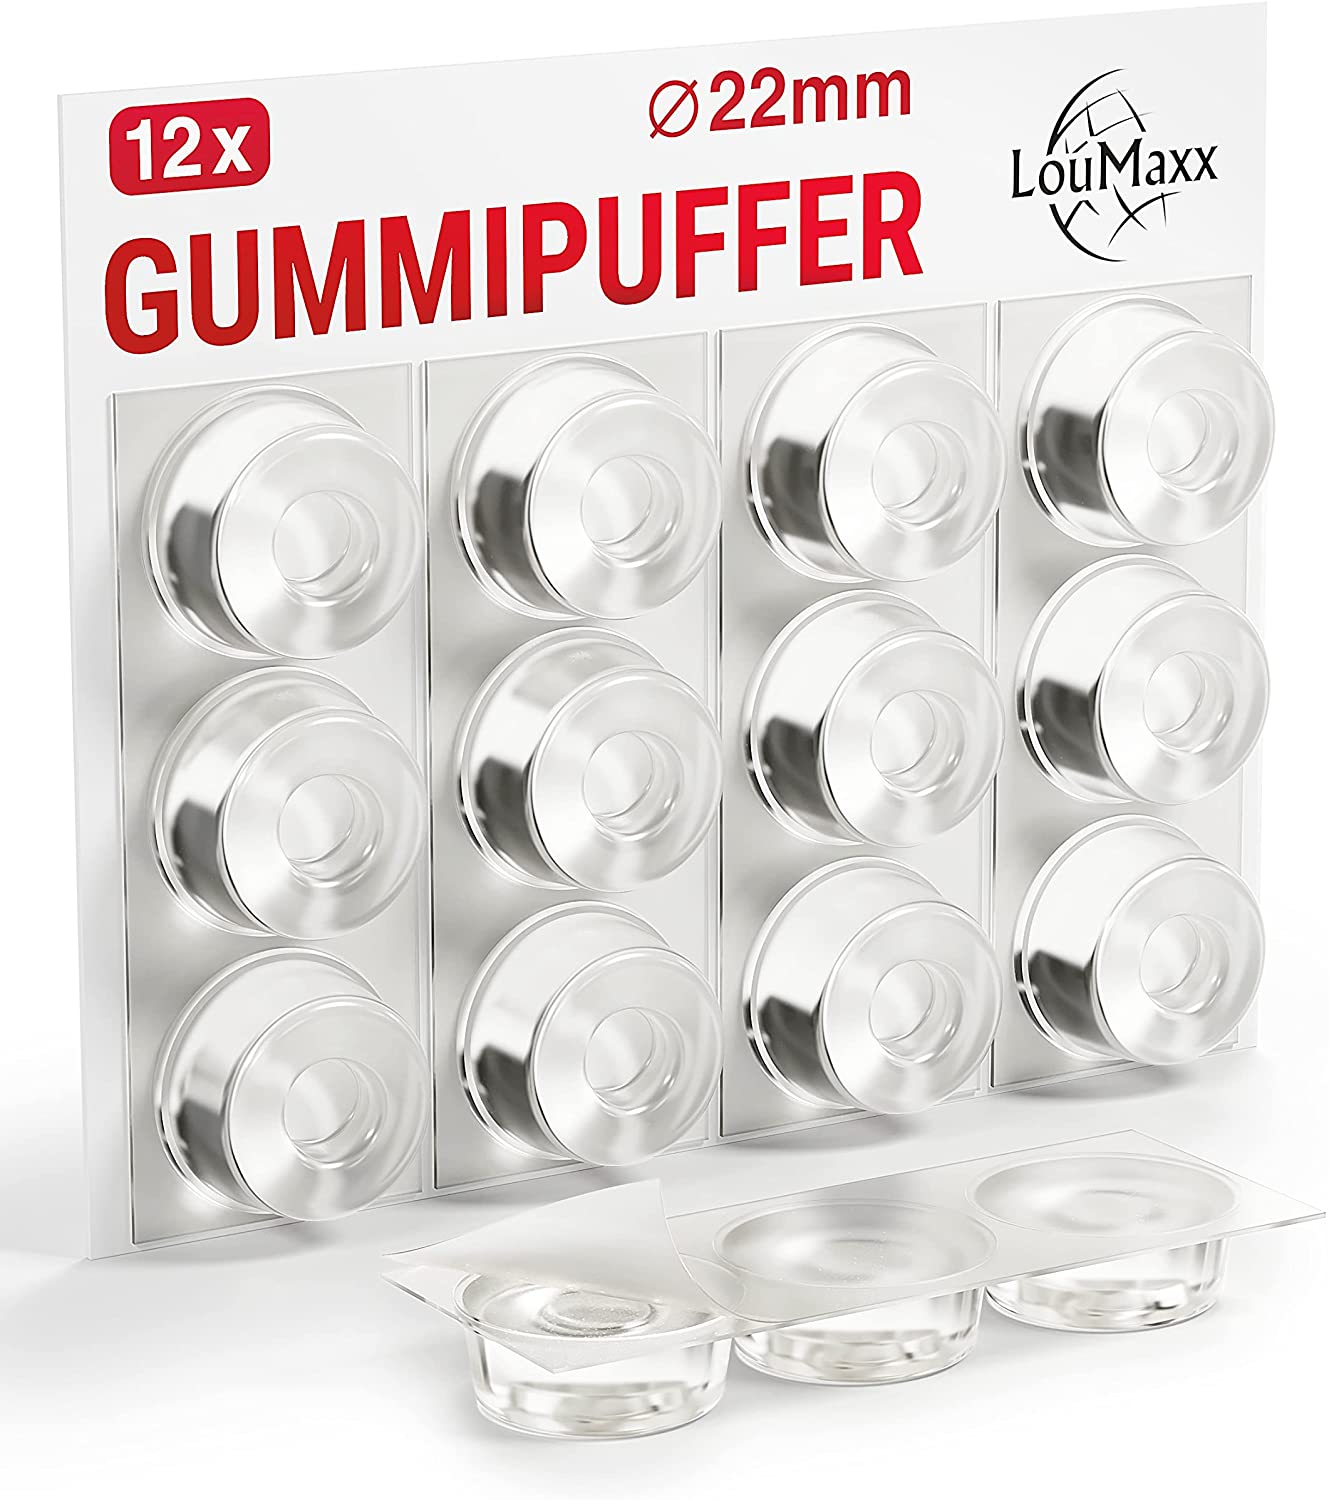 LouMaxx Gummipuffer - 12x Puffer transparent 22mm Ø - Gumminoppen für Glasplatten – Elastikpuffer transparent selbstklebend – Anschlagpuffer